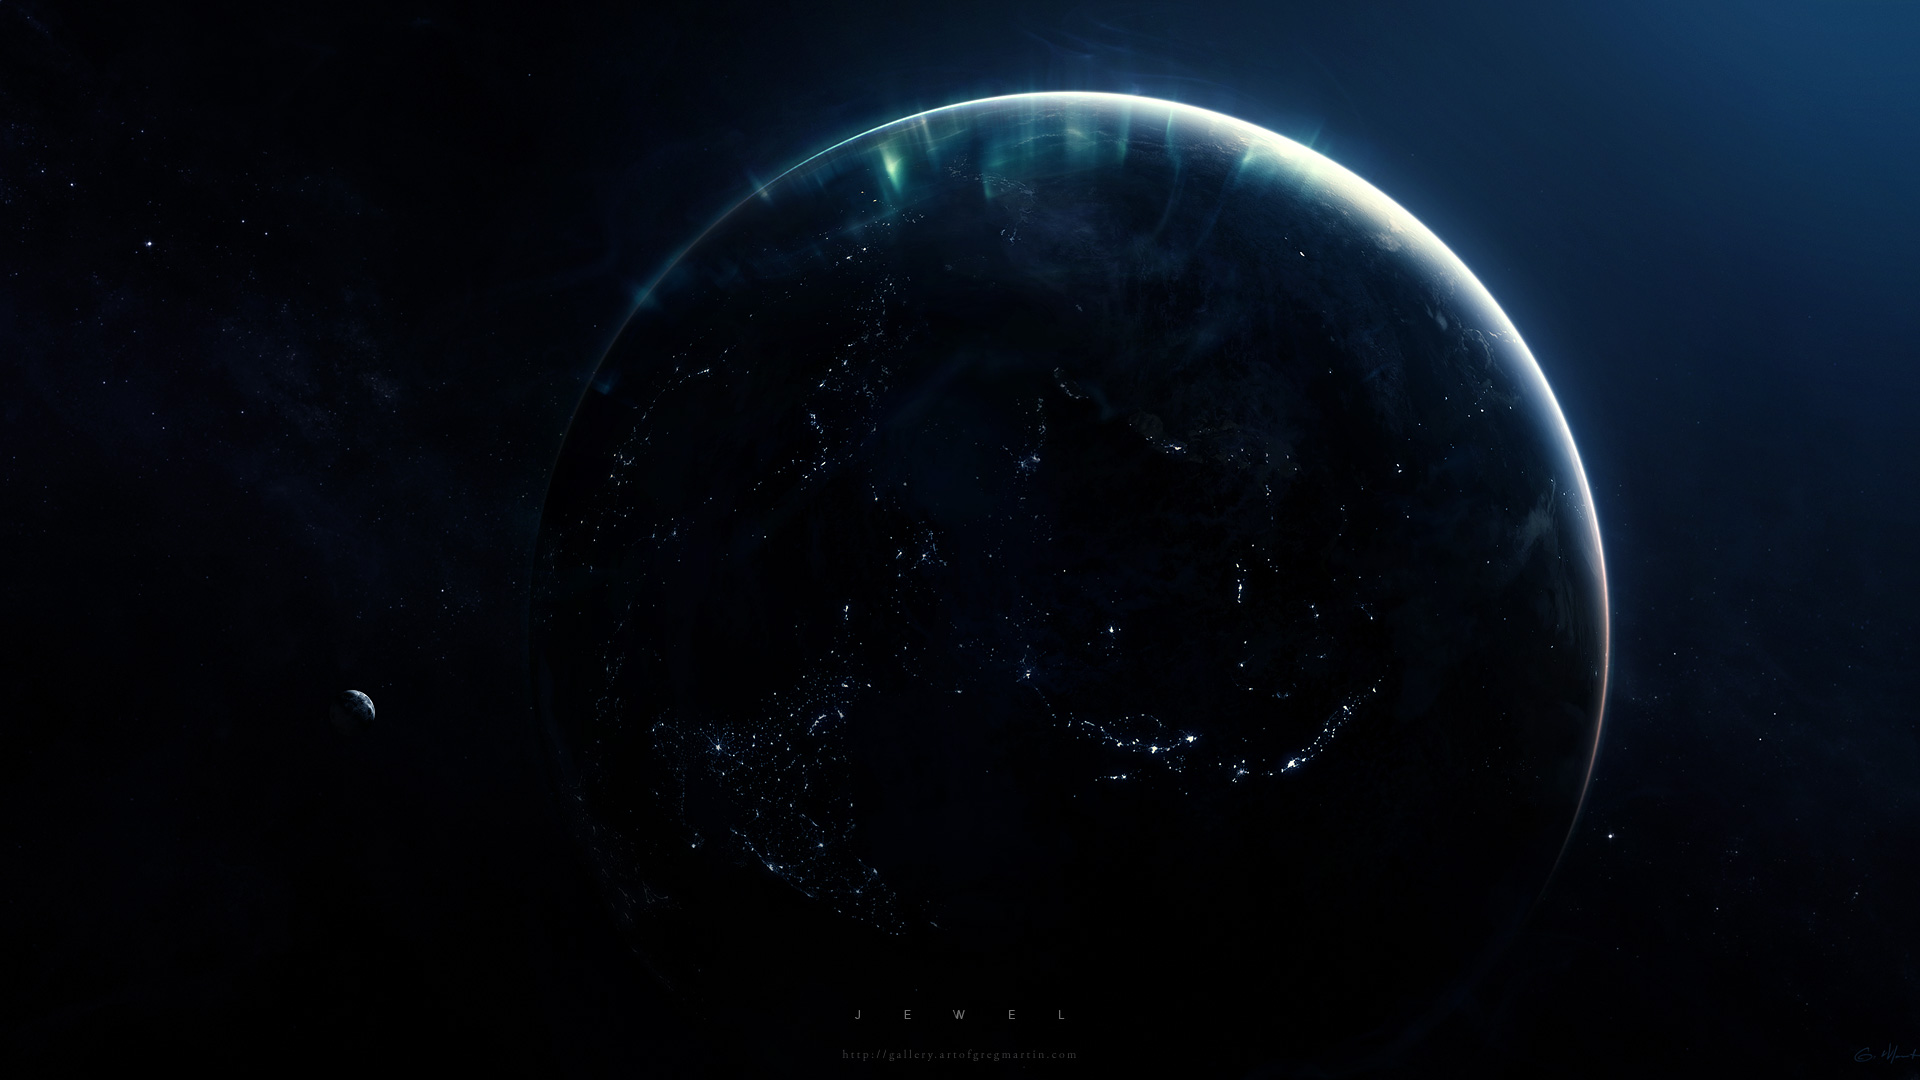 outer space, planets, Greg Martin - desktop wallpaper